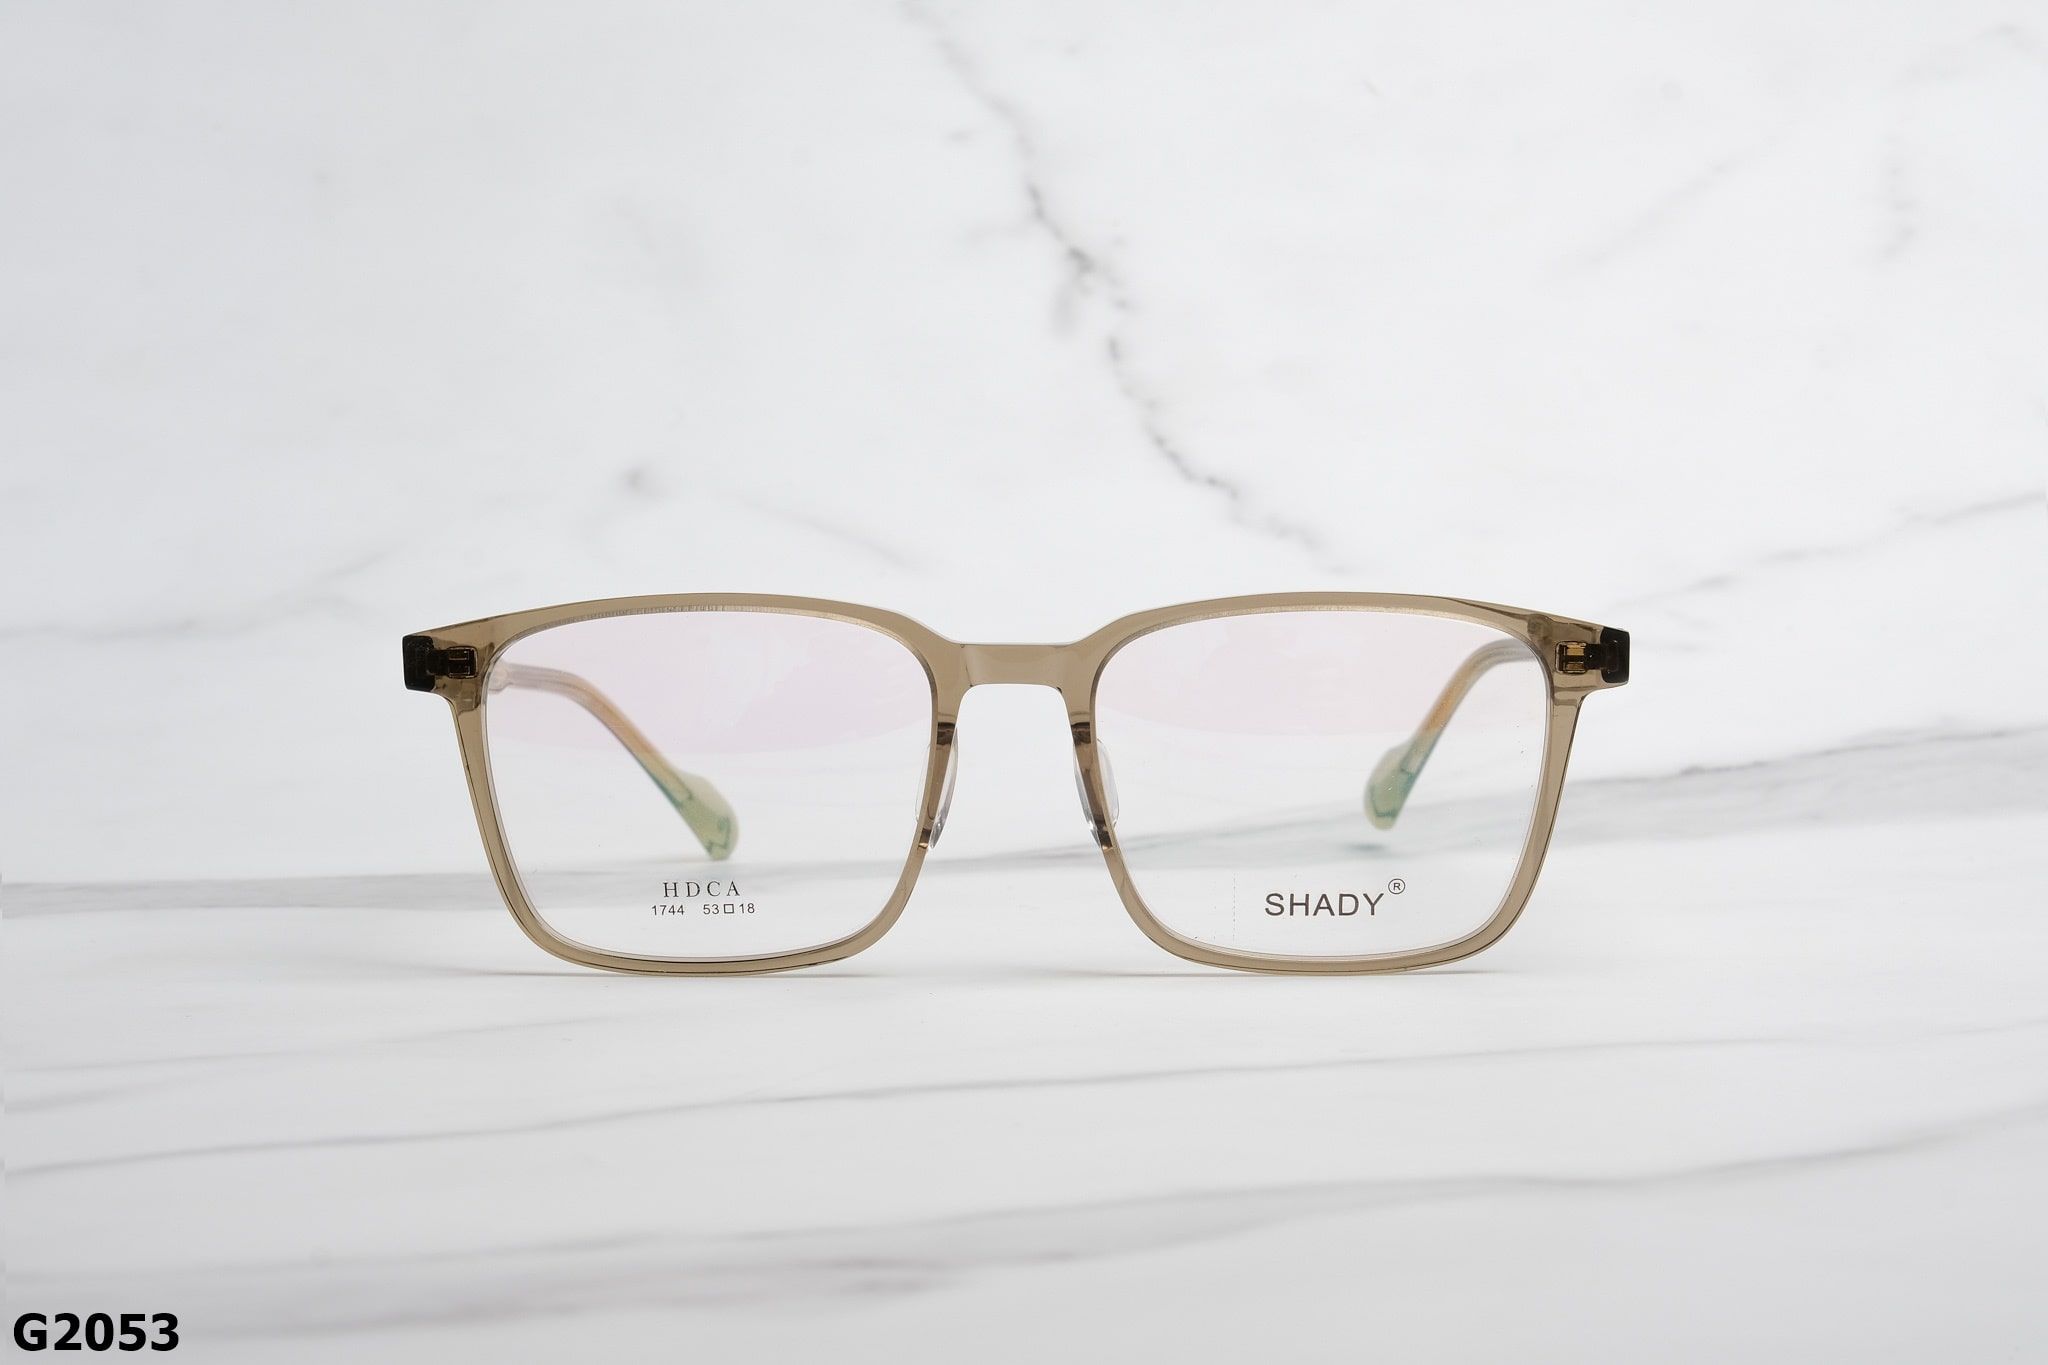  SHADY Eyewear - Glasses - G2053 